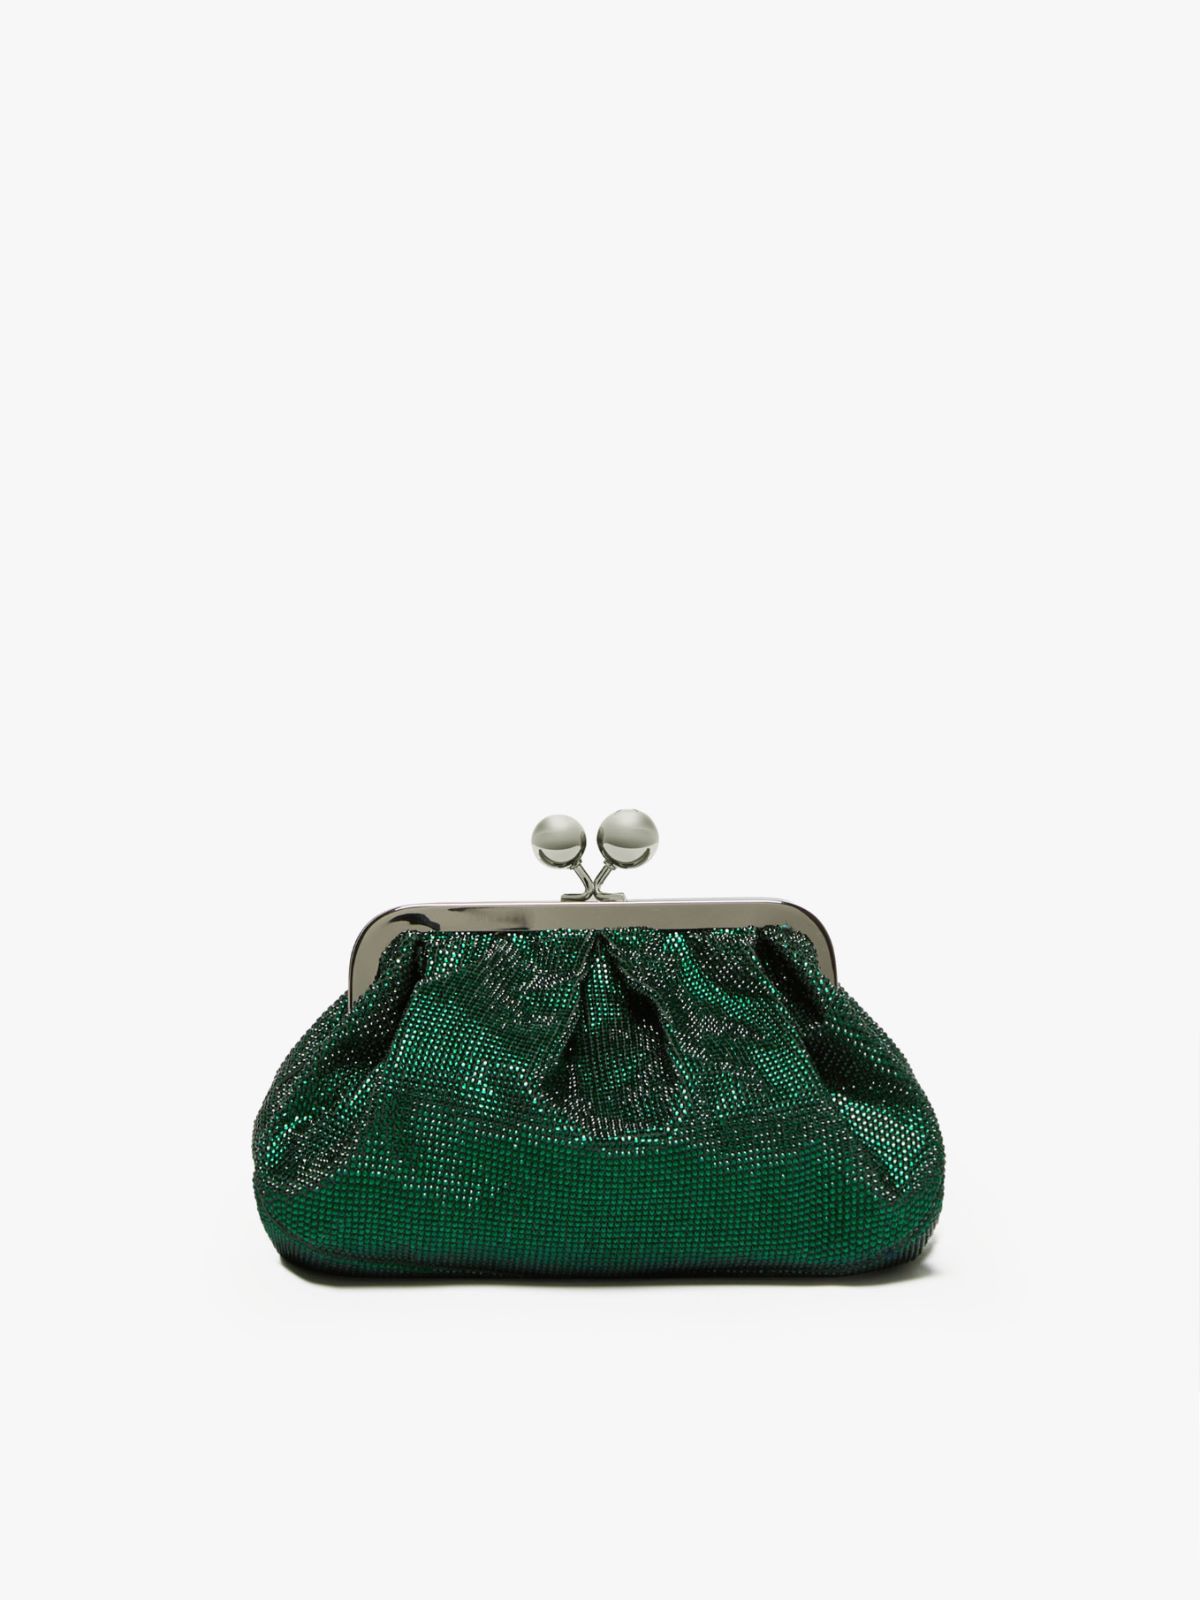 Small Pasticcino Bag in rhinestones - EMERALD - Weekend Max Mara - 3